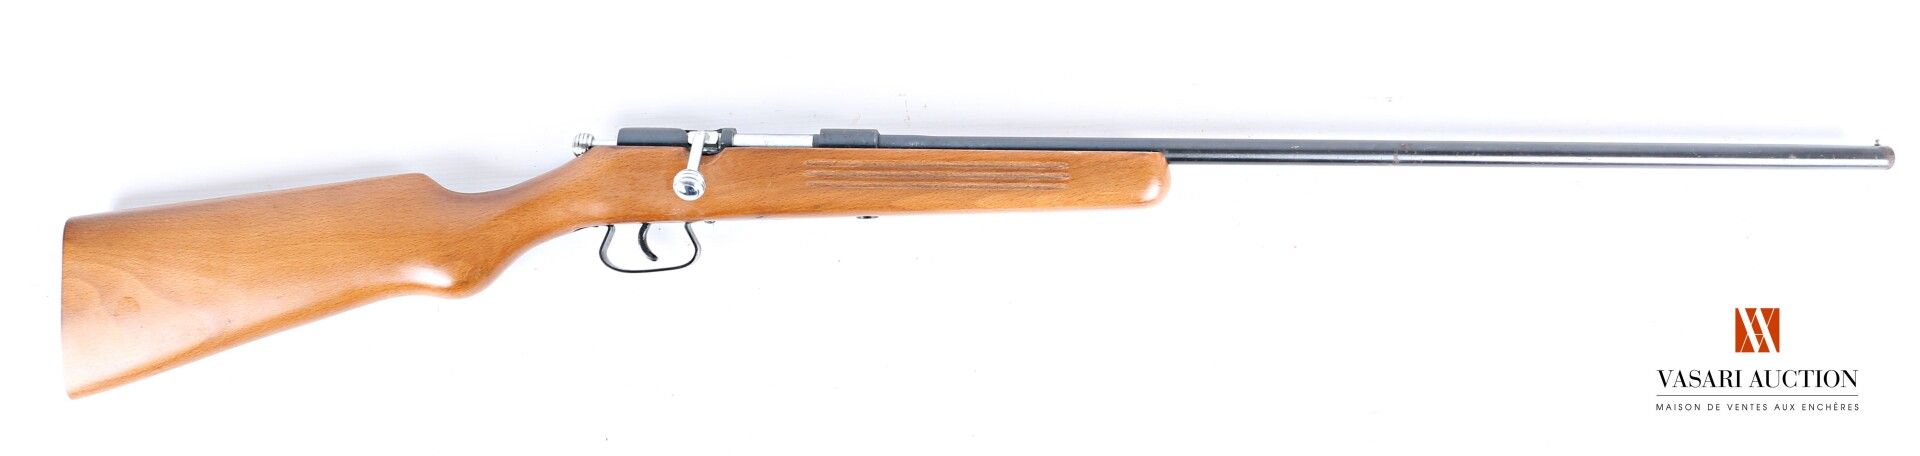 Null 来自圣艾蒂安的单管栓动步枪，口径12毫米，枪管65厘米，磨损，氧化，长度112厘米，编号065 313（RGA AA756）。

C类 1°c